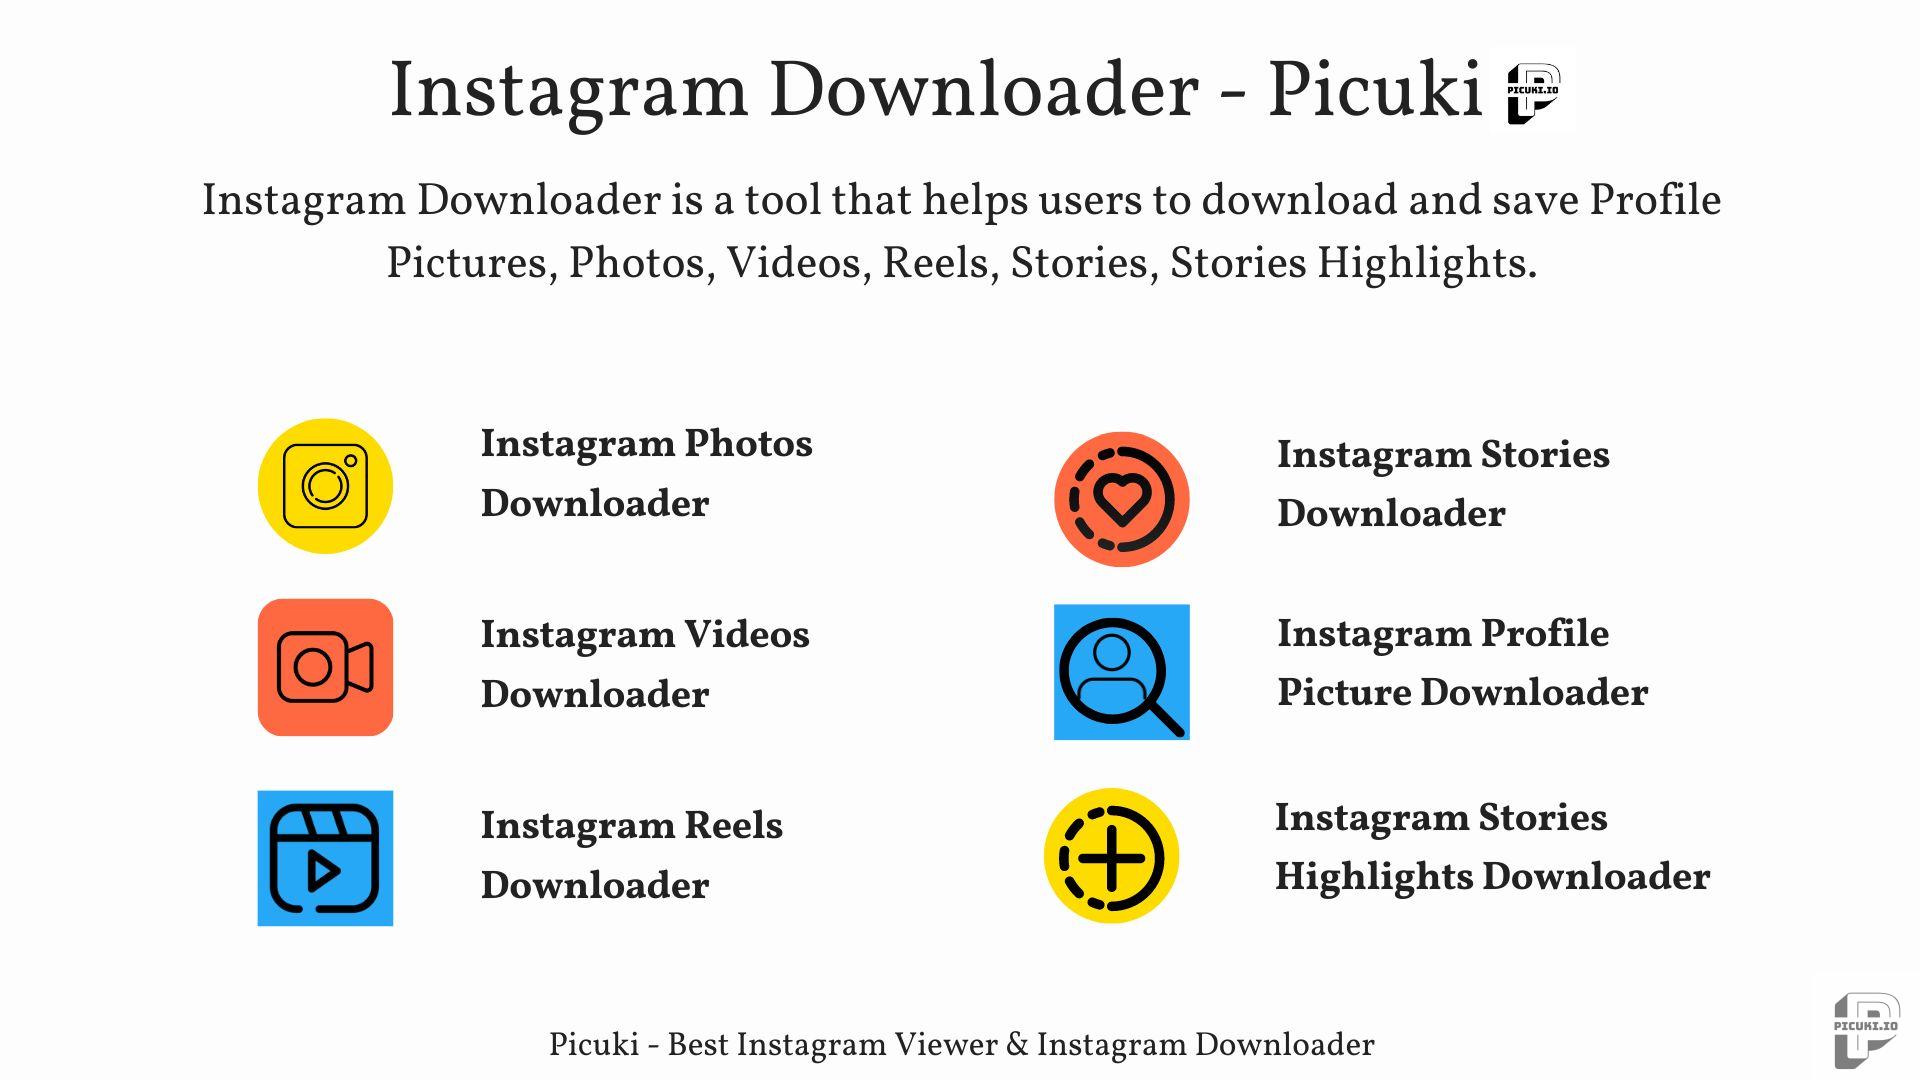 Picuki - Instagram Downloader